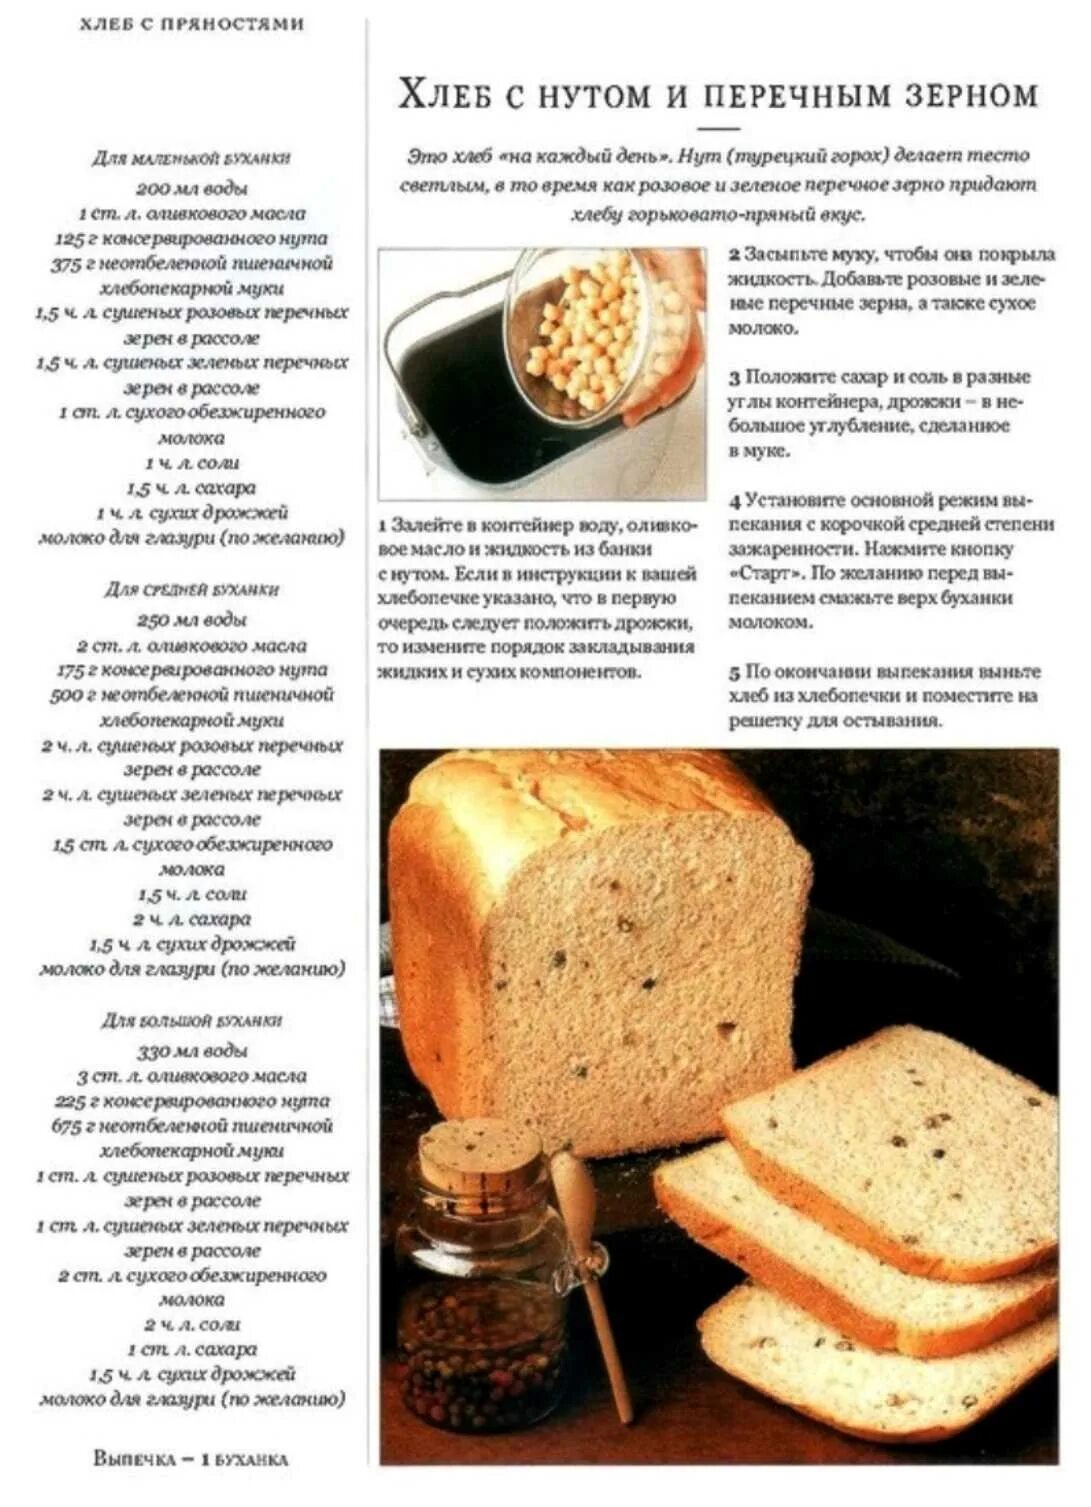 Рецепт хлеба без сахара. Рецепт хлеба. Выпечка хлеба в хлебопечке-рецепты. Хлеб из хлебопечки. Рецепт хлеба в хлебопечке.